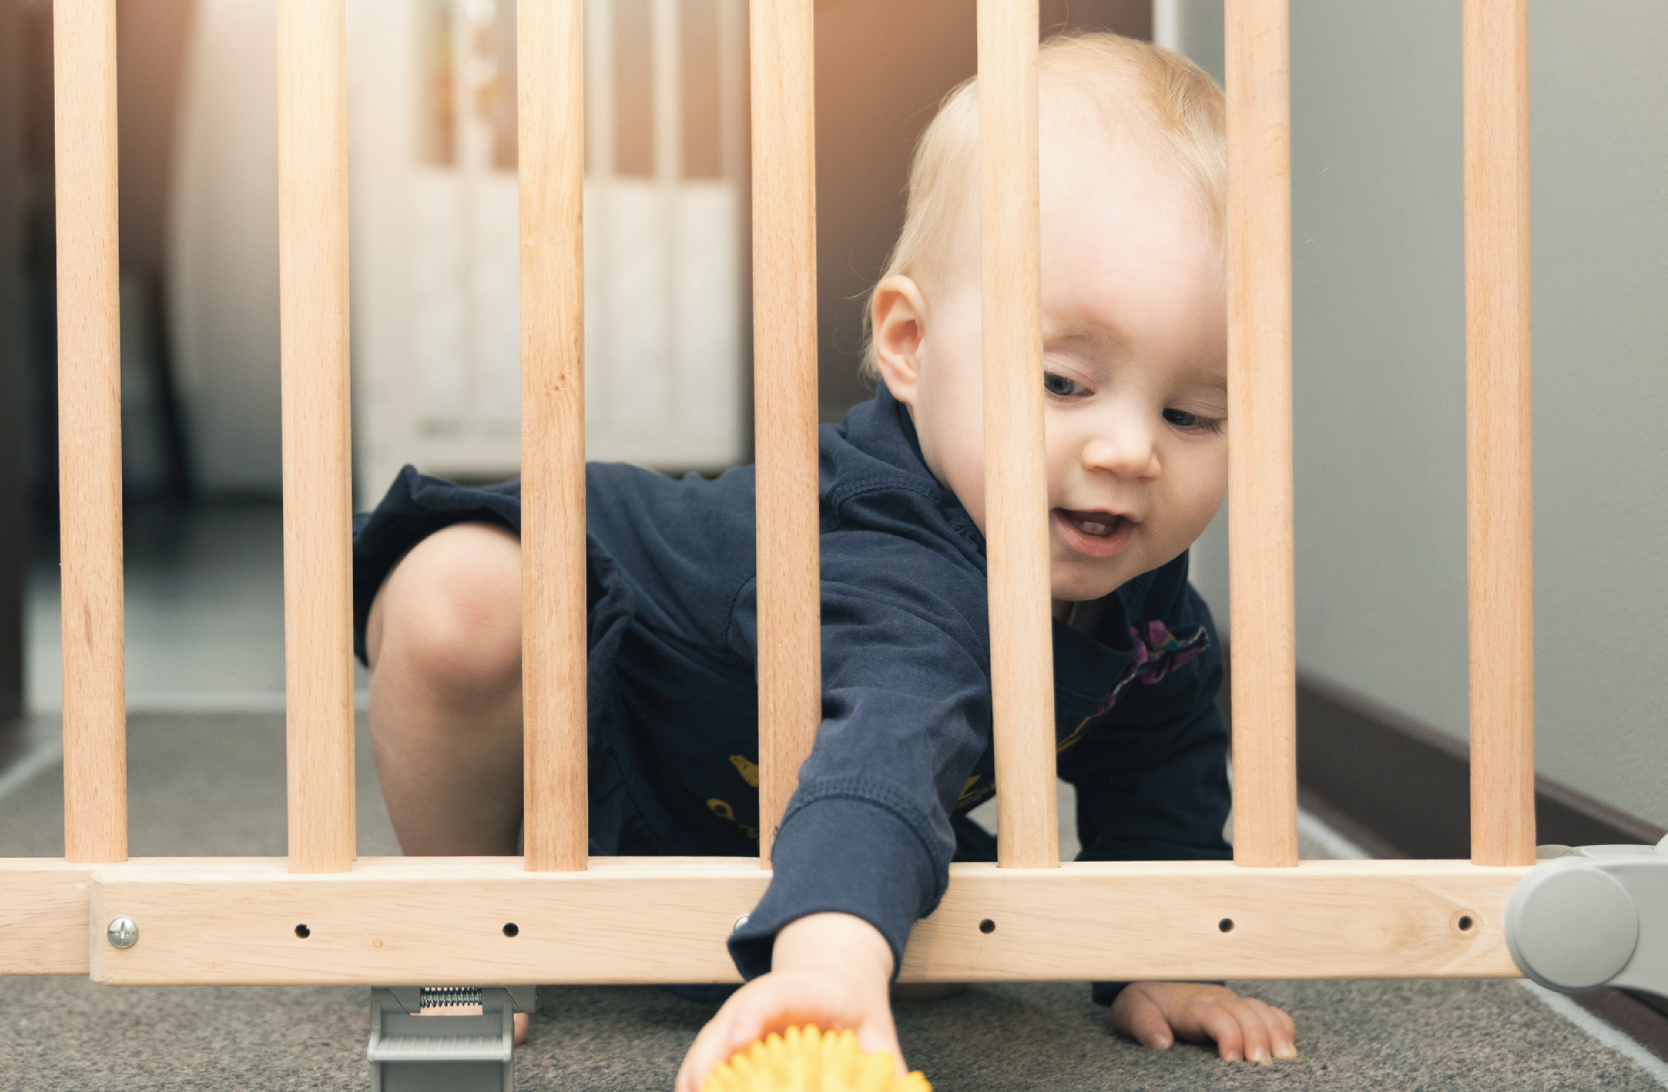 Child reaching through a baby gate